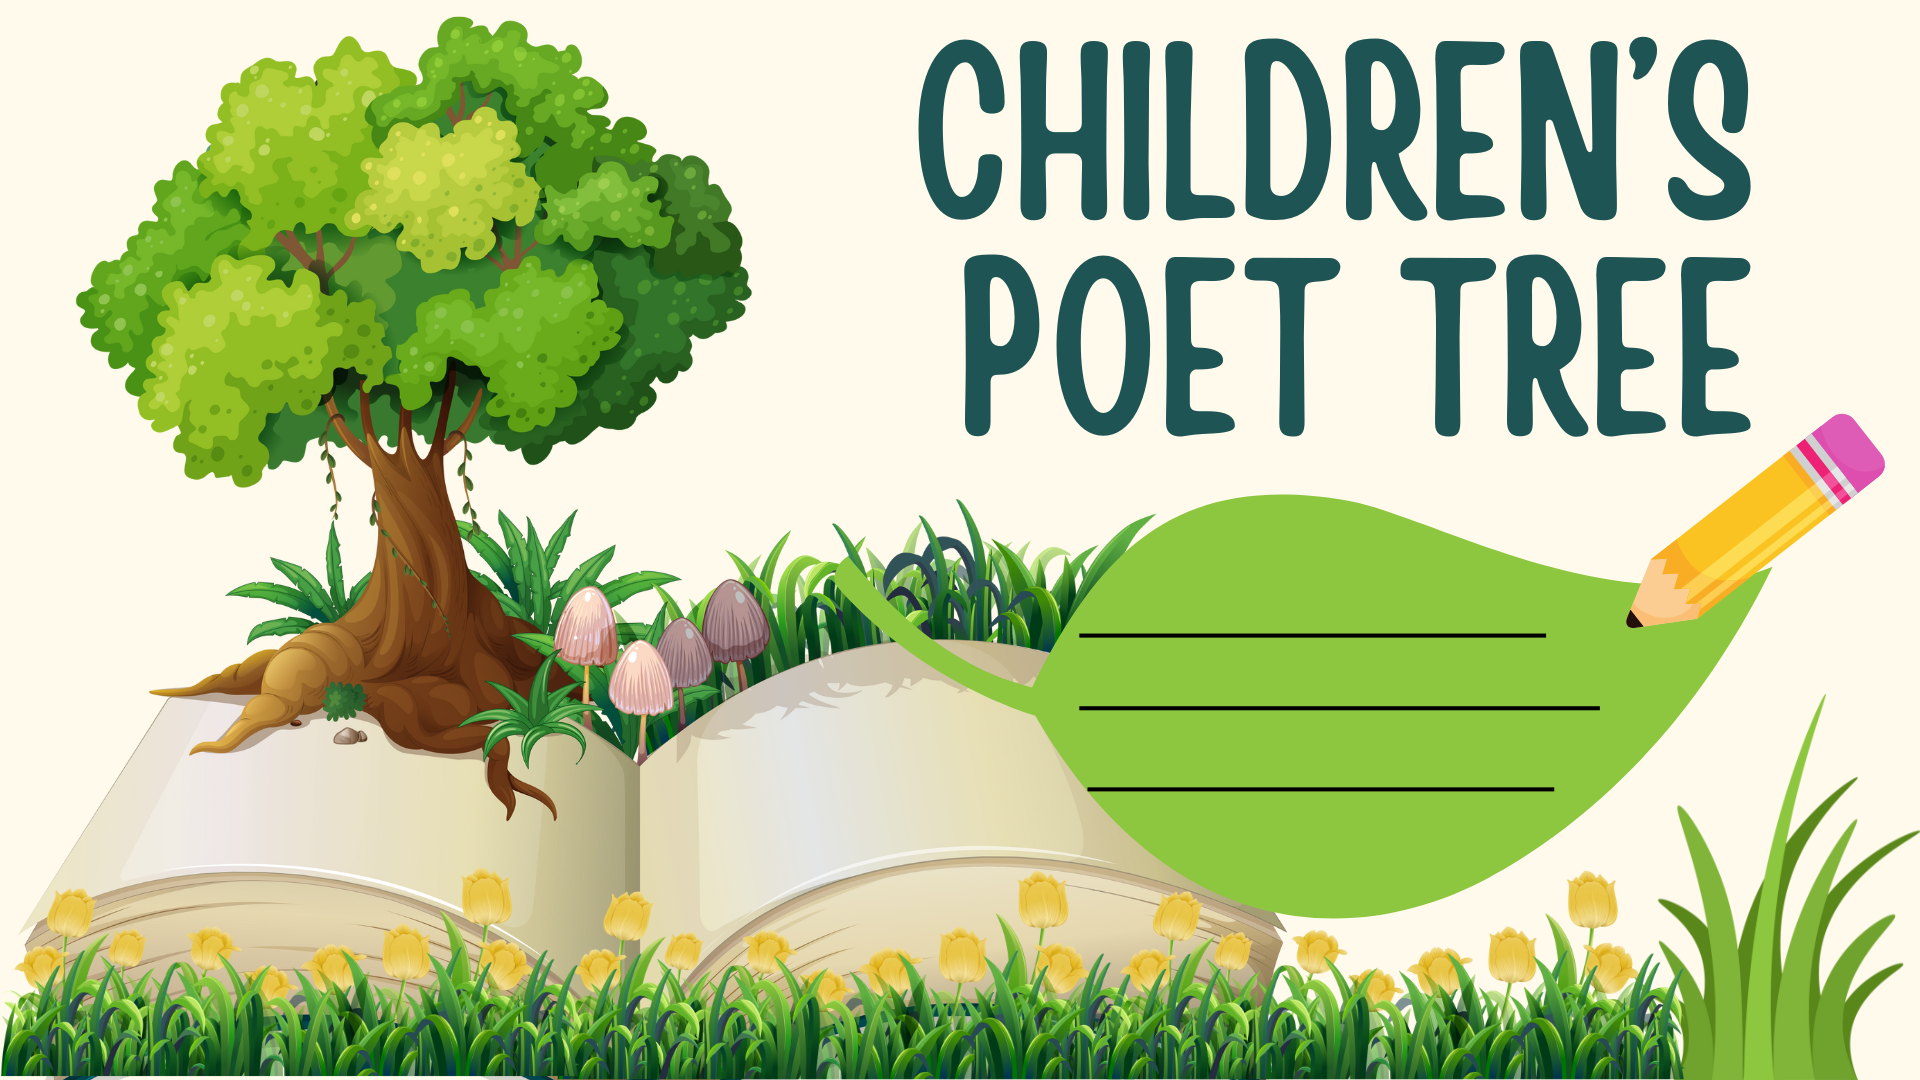 Children's Poet Tree